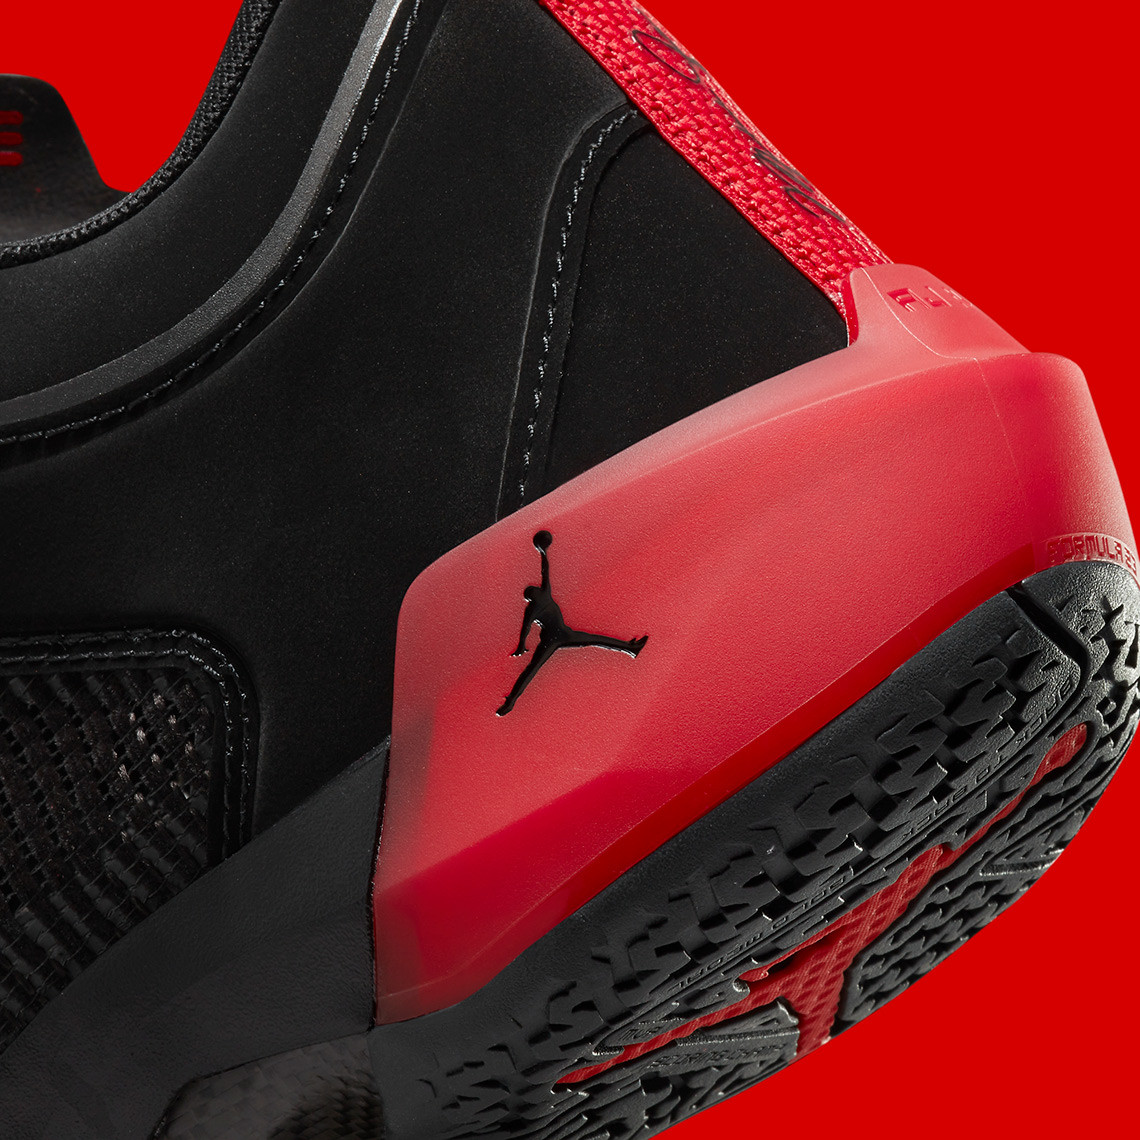 Nike Air Jordan 1 Retro OG 'Gatorade' Blue Lagoon Enter Raffle Now